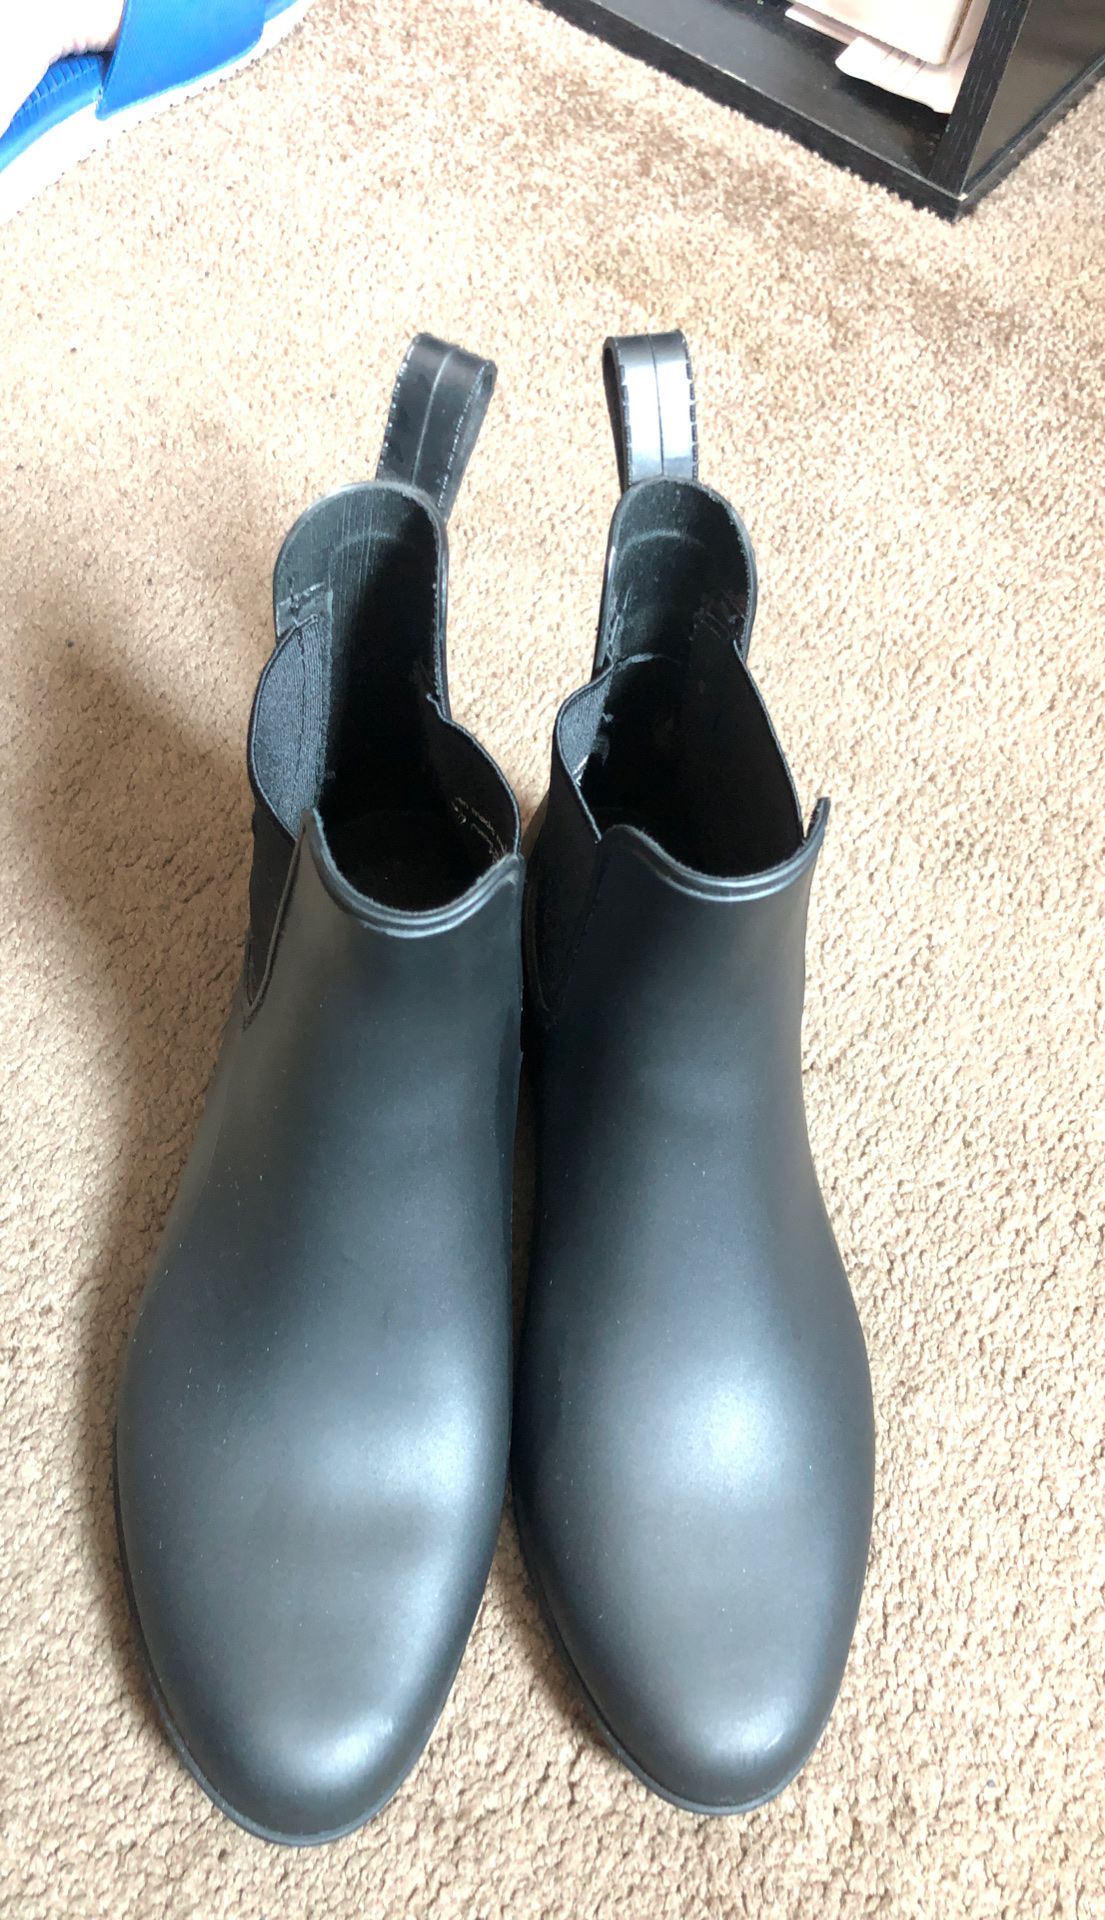 Cute black boots